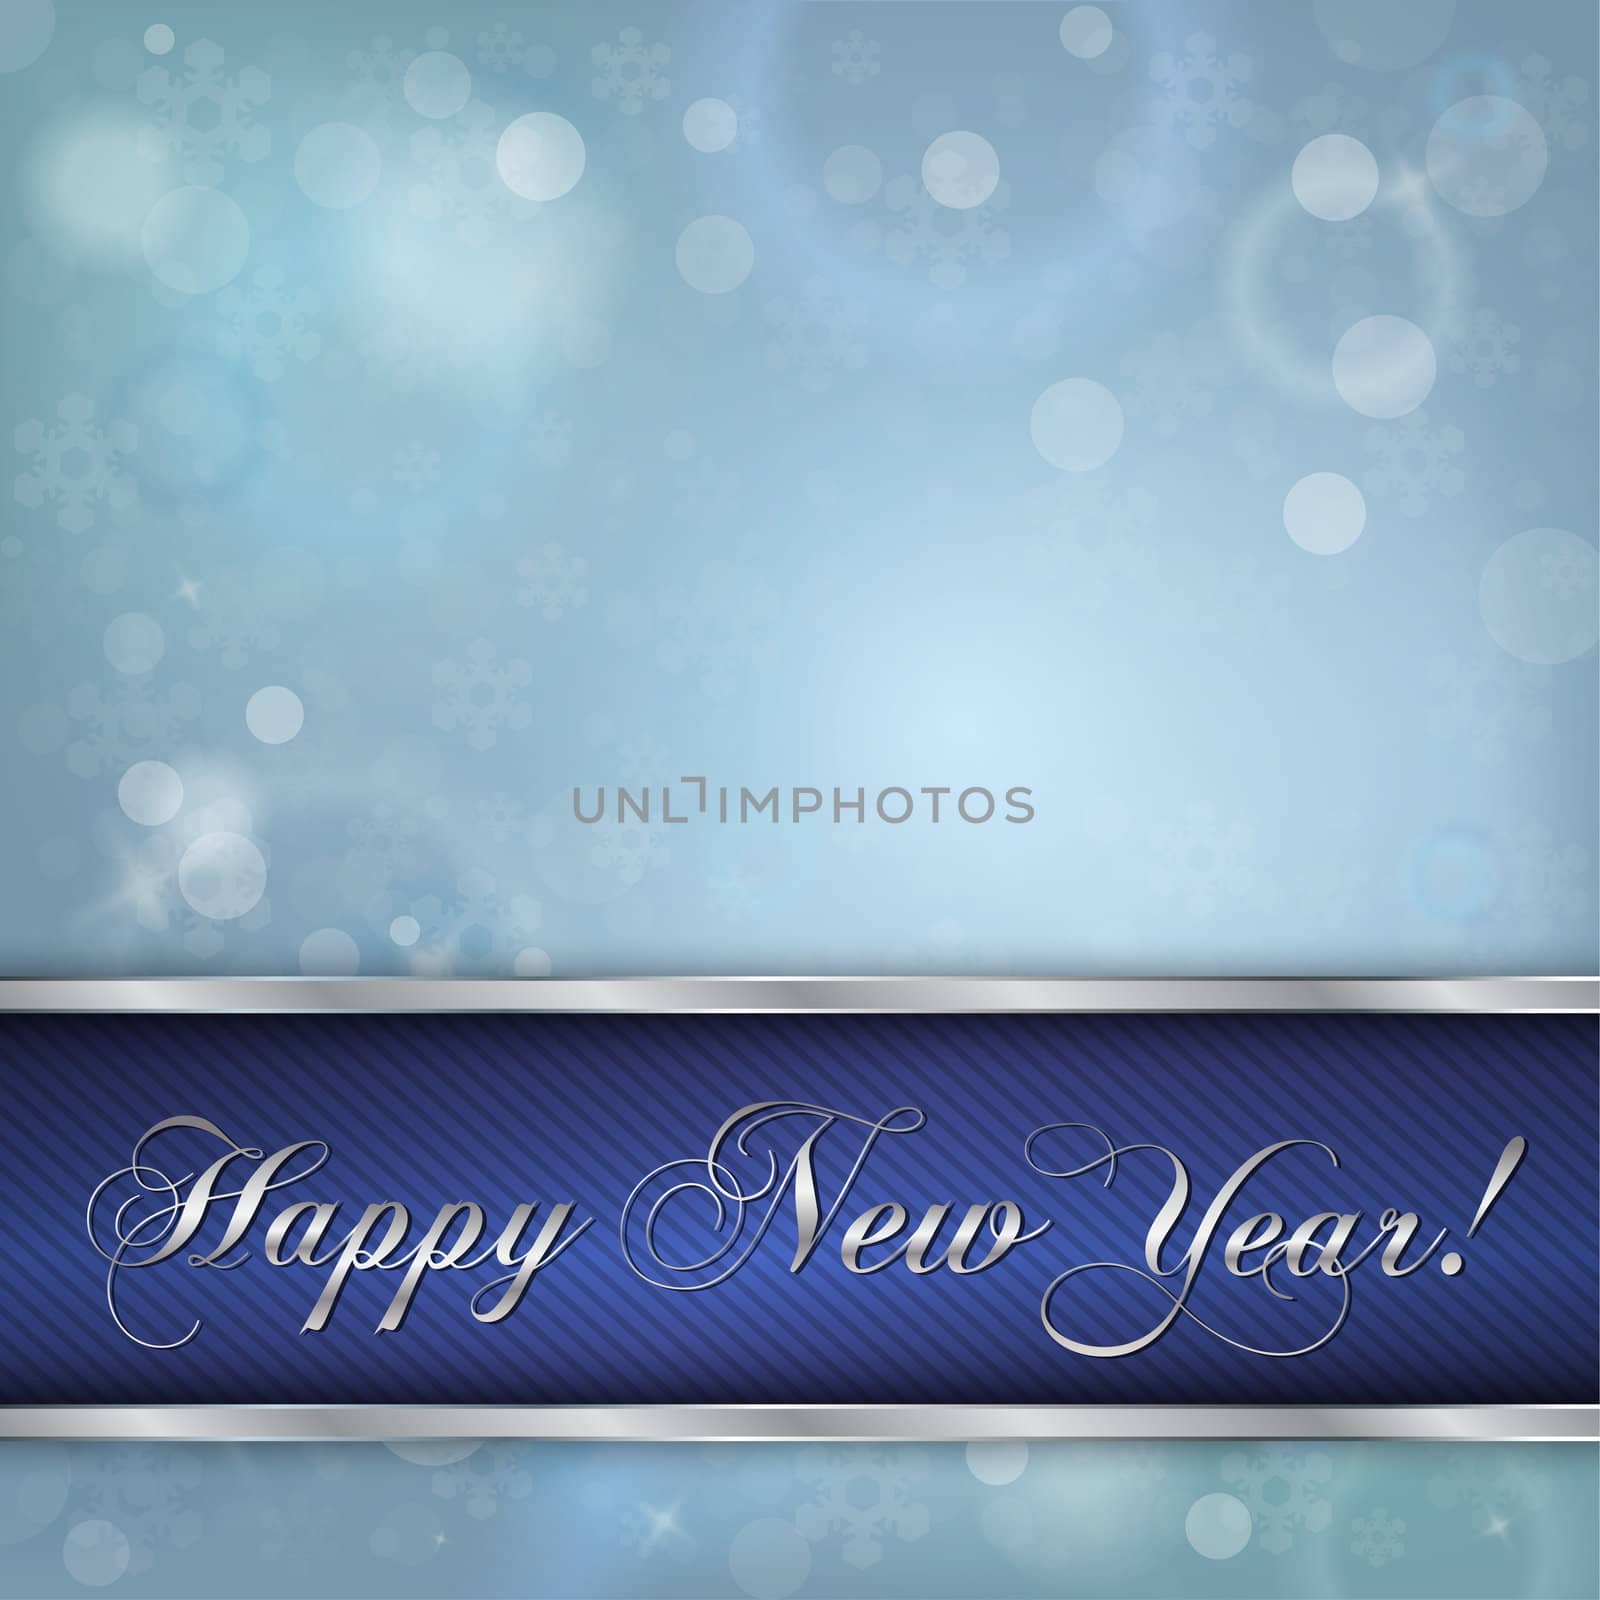 Happy New Year background by wertaw